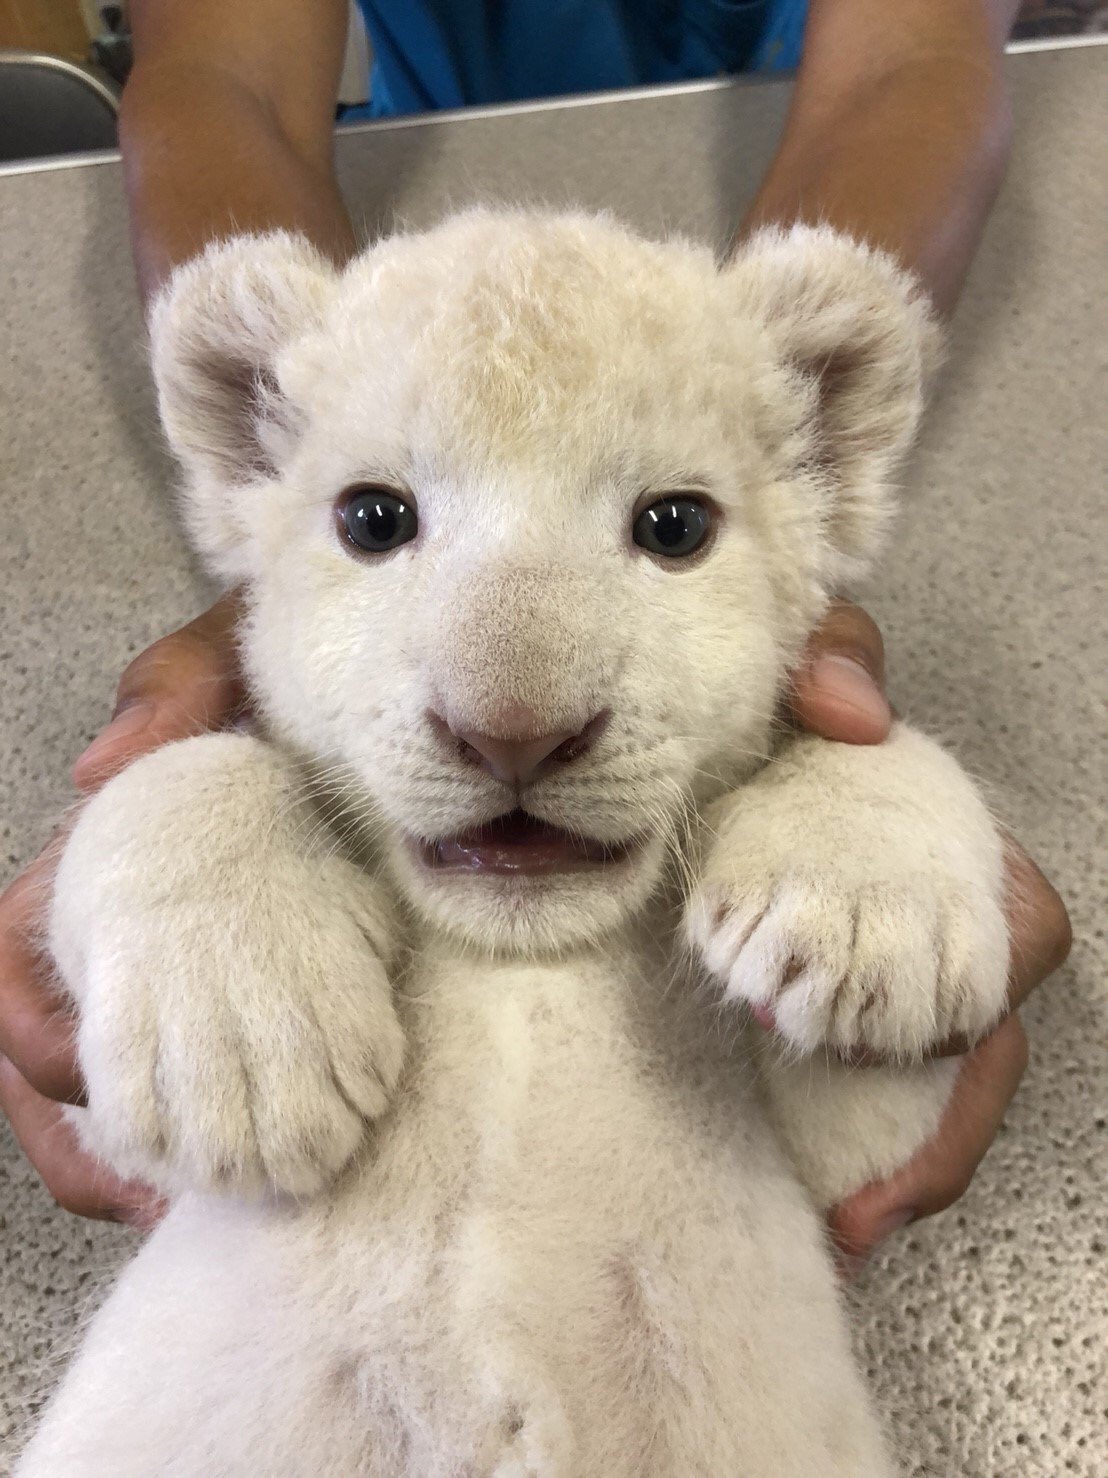 Twitter 上的 癒される動物 東北サファリパークのホワイトライオンの赤ちゃんがかわいい T Co 0d1dlctq5b Twitter